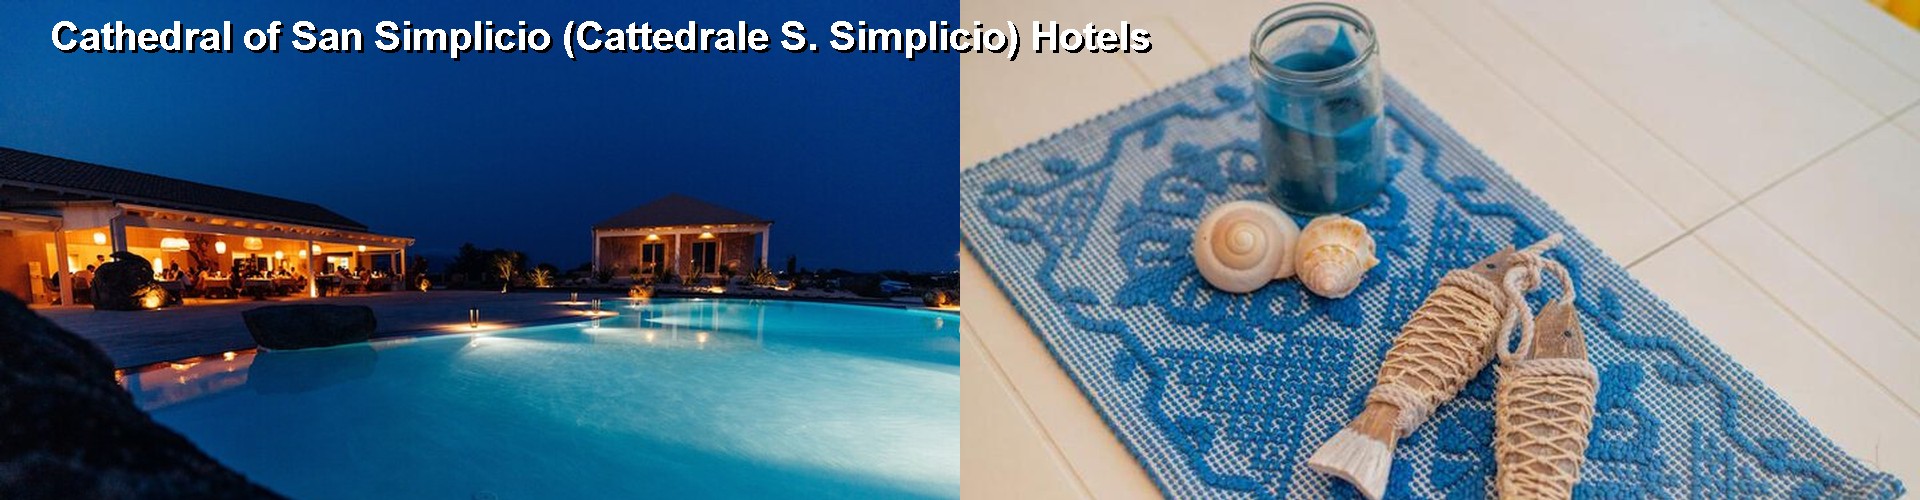 5 Best Hotels near Cathedral of San Simplicio (Cattedrale S. Simplicio)